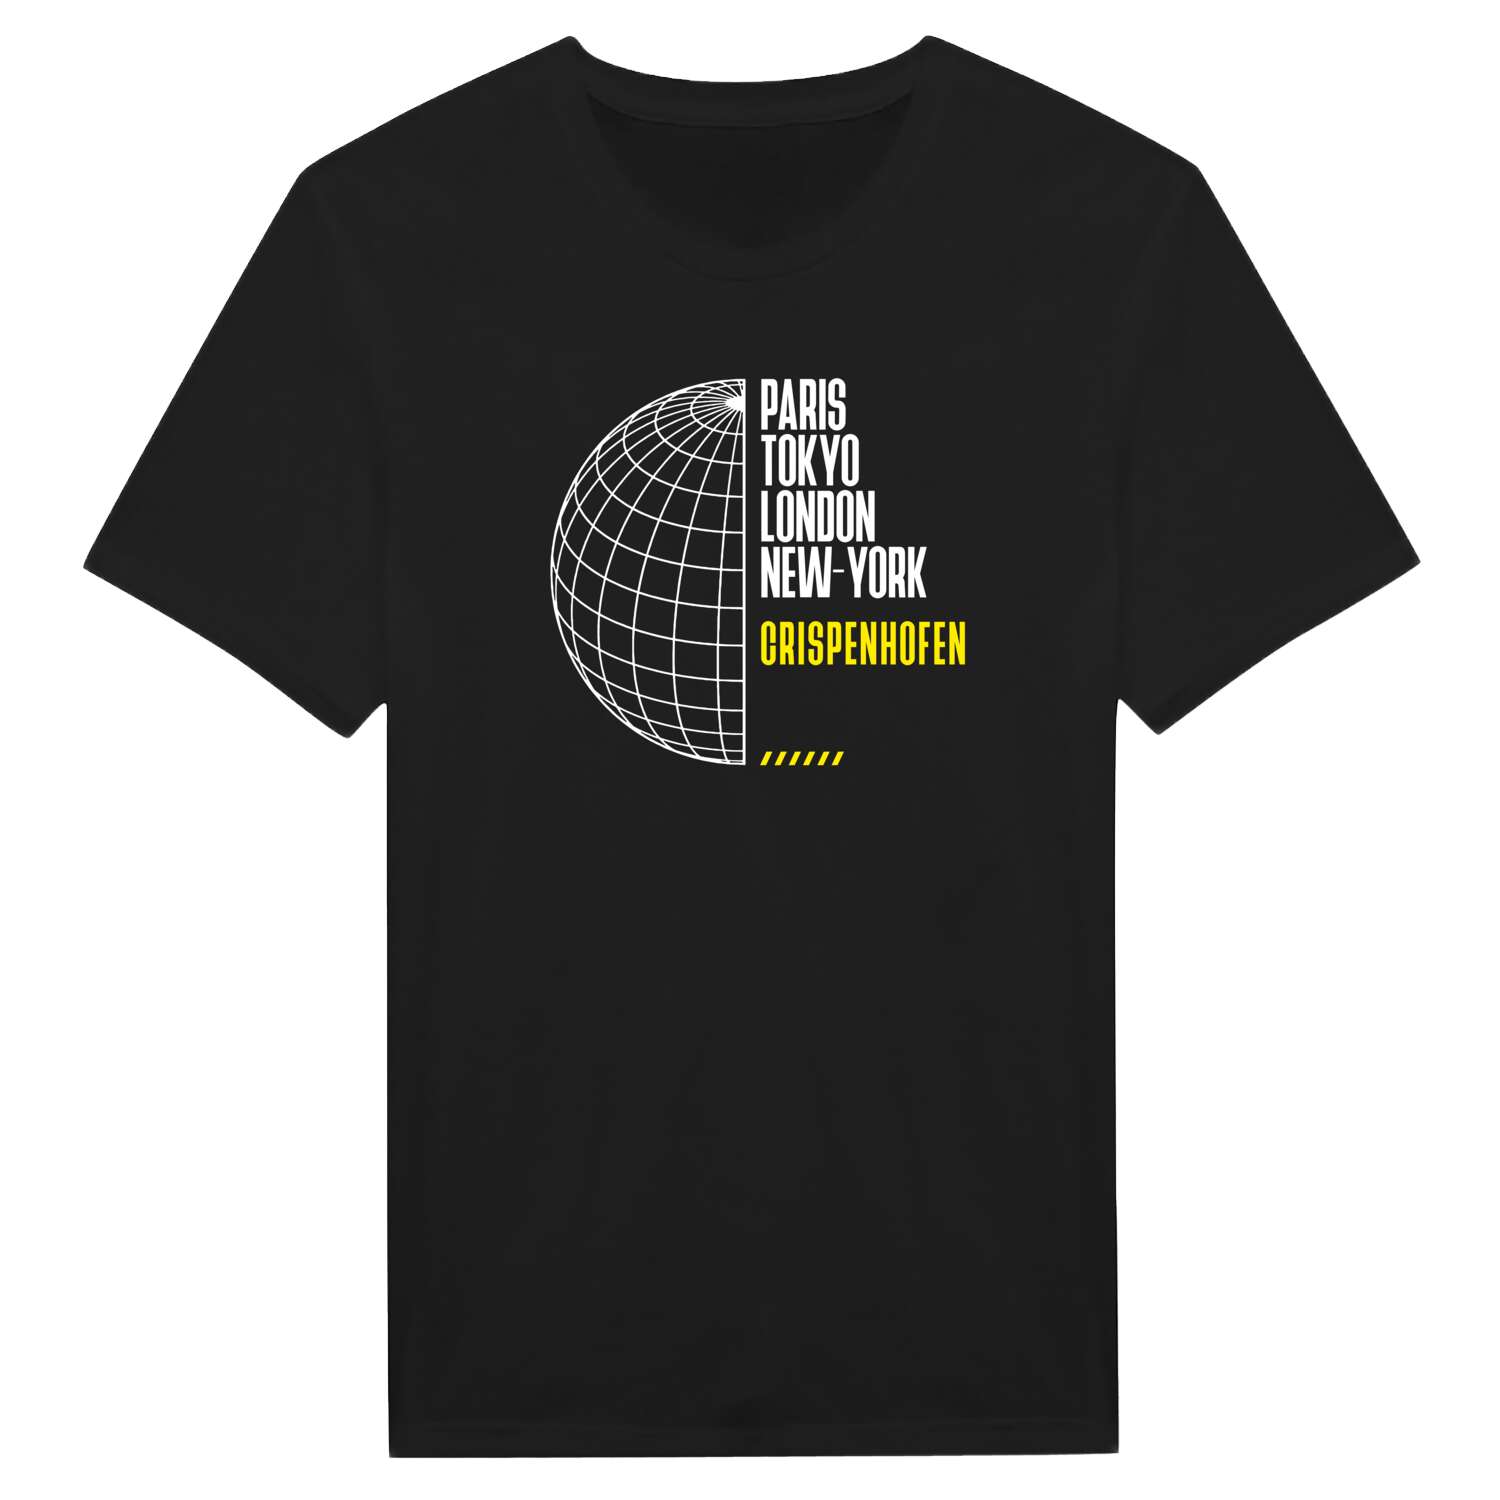 Crispenhofen T-Shirt »Paris Tokyo London«